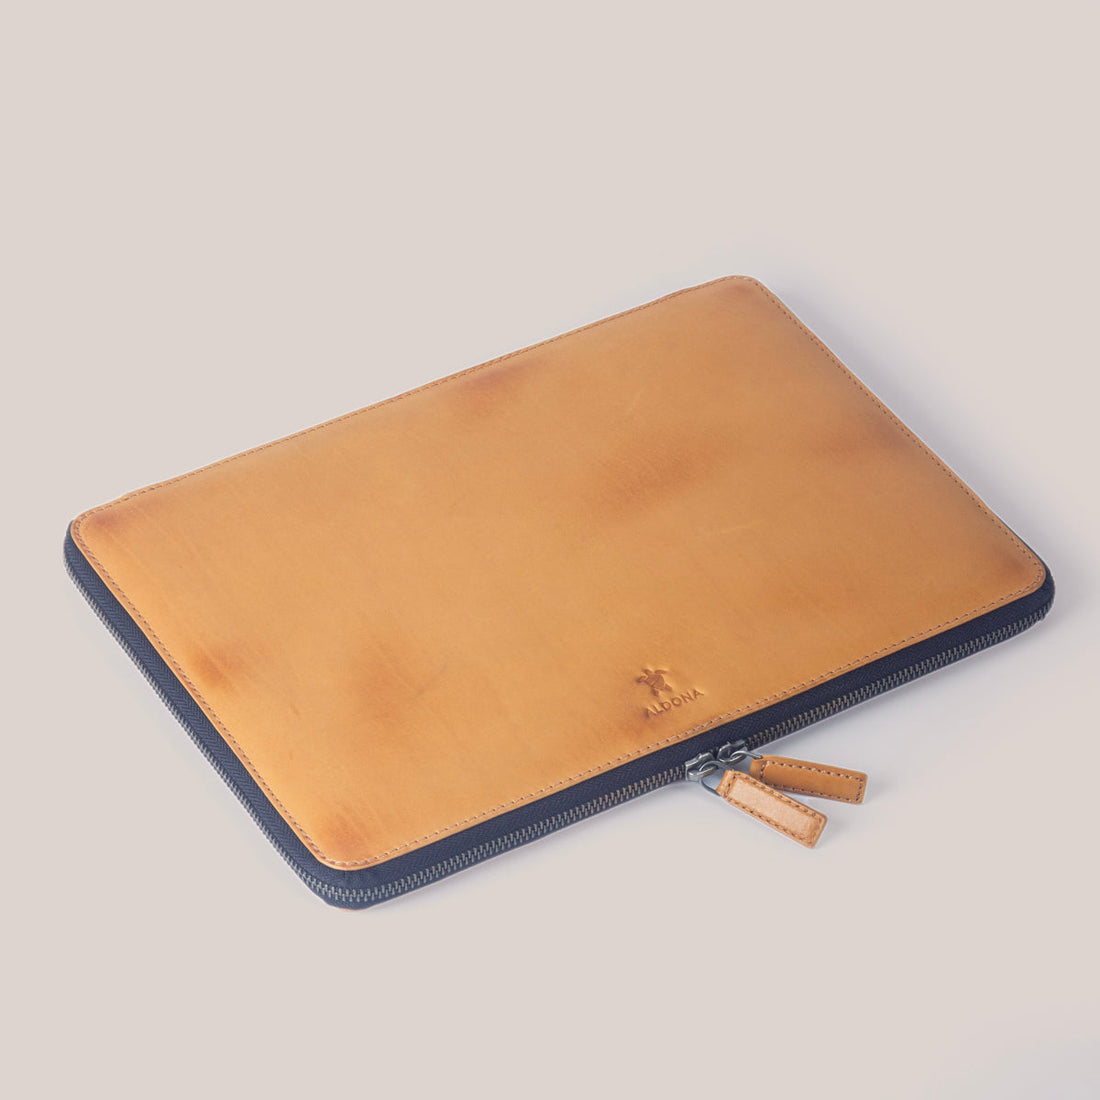 Microsoft Surface Book 13.5 Zippered Laptop Case - Felt and Tan Crunch